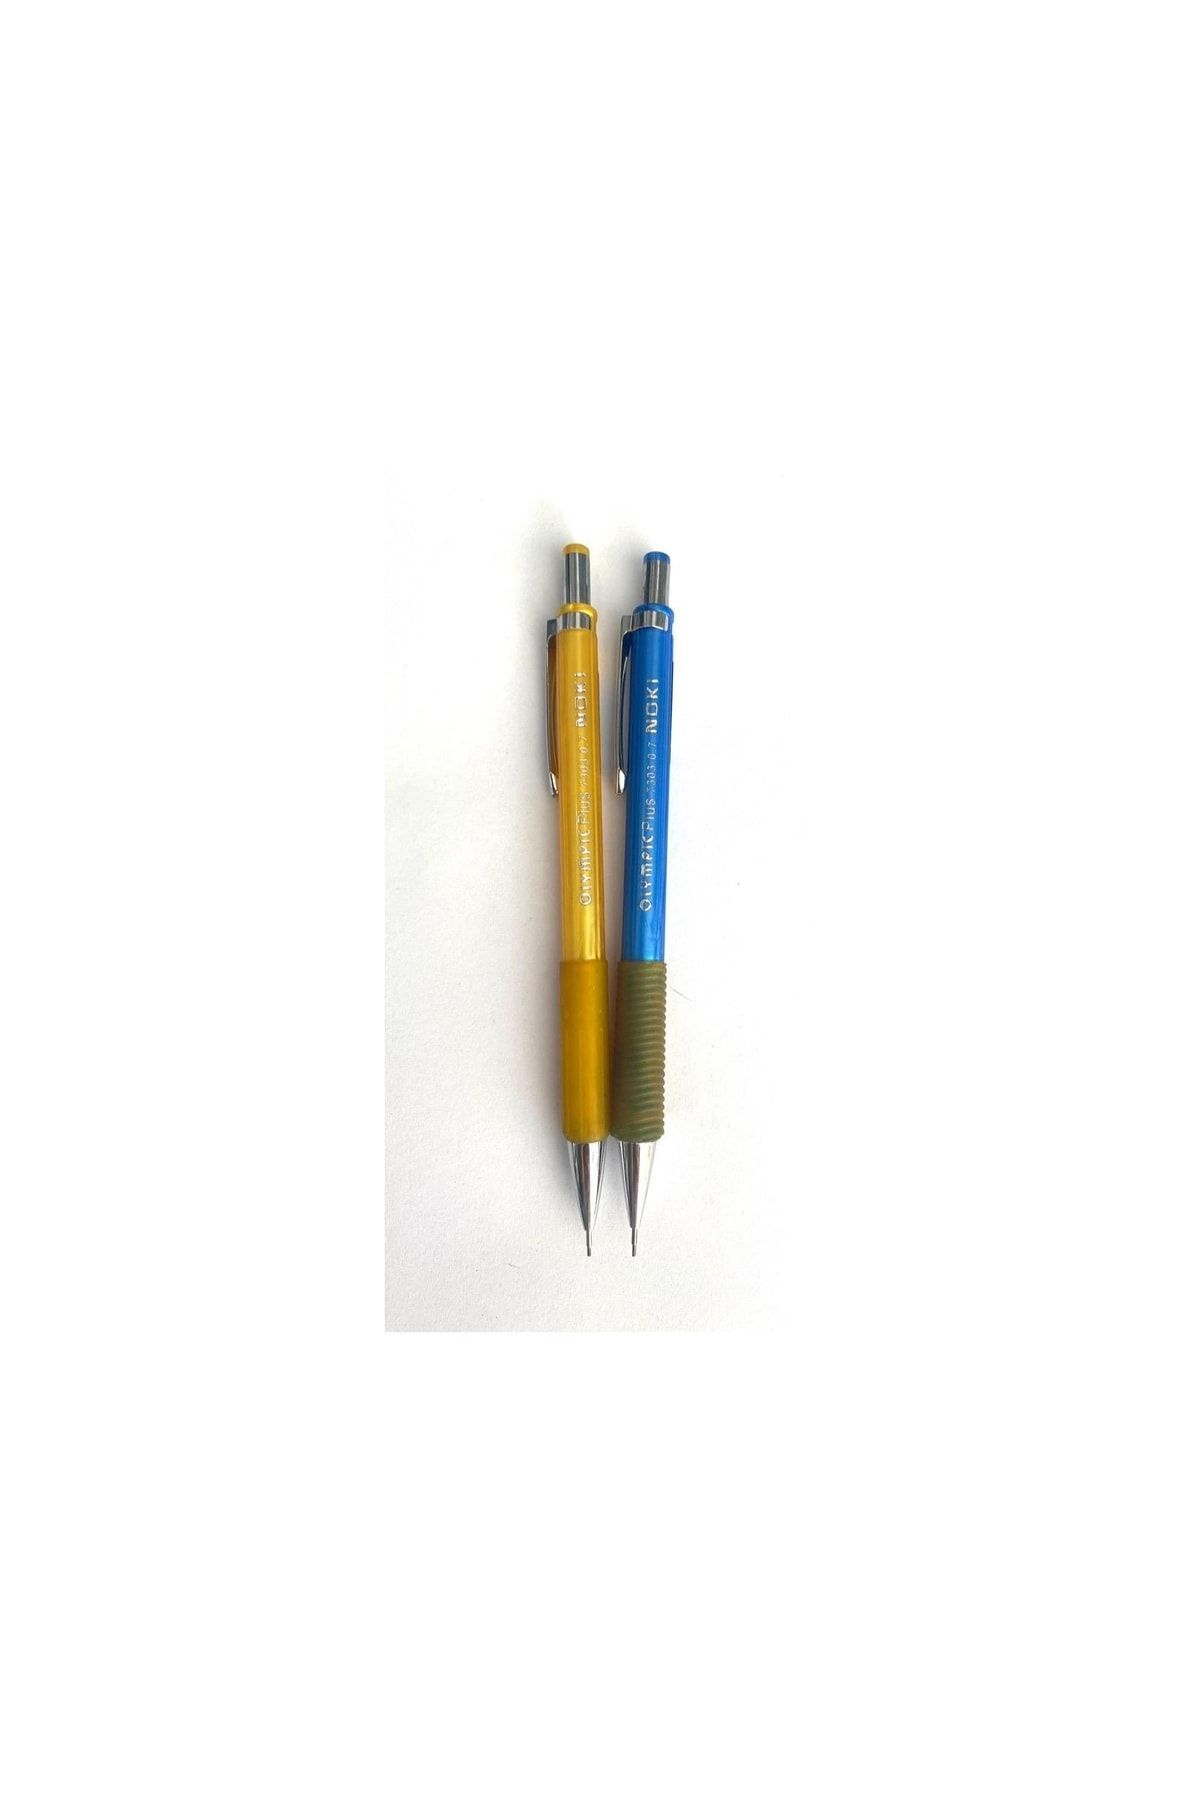 Noki Olympıc Plus 7303 Versatil 0,7mm Sarı-mavi 2 Adet